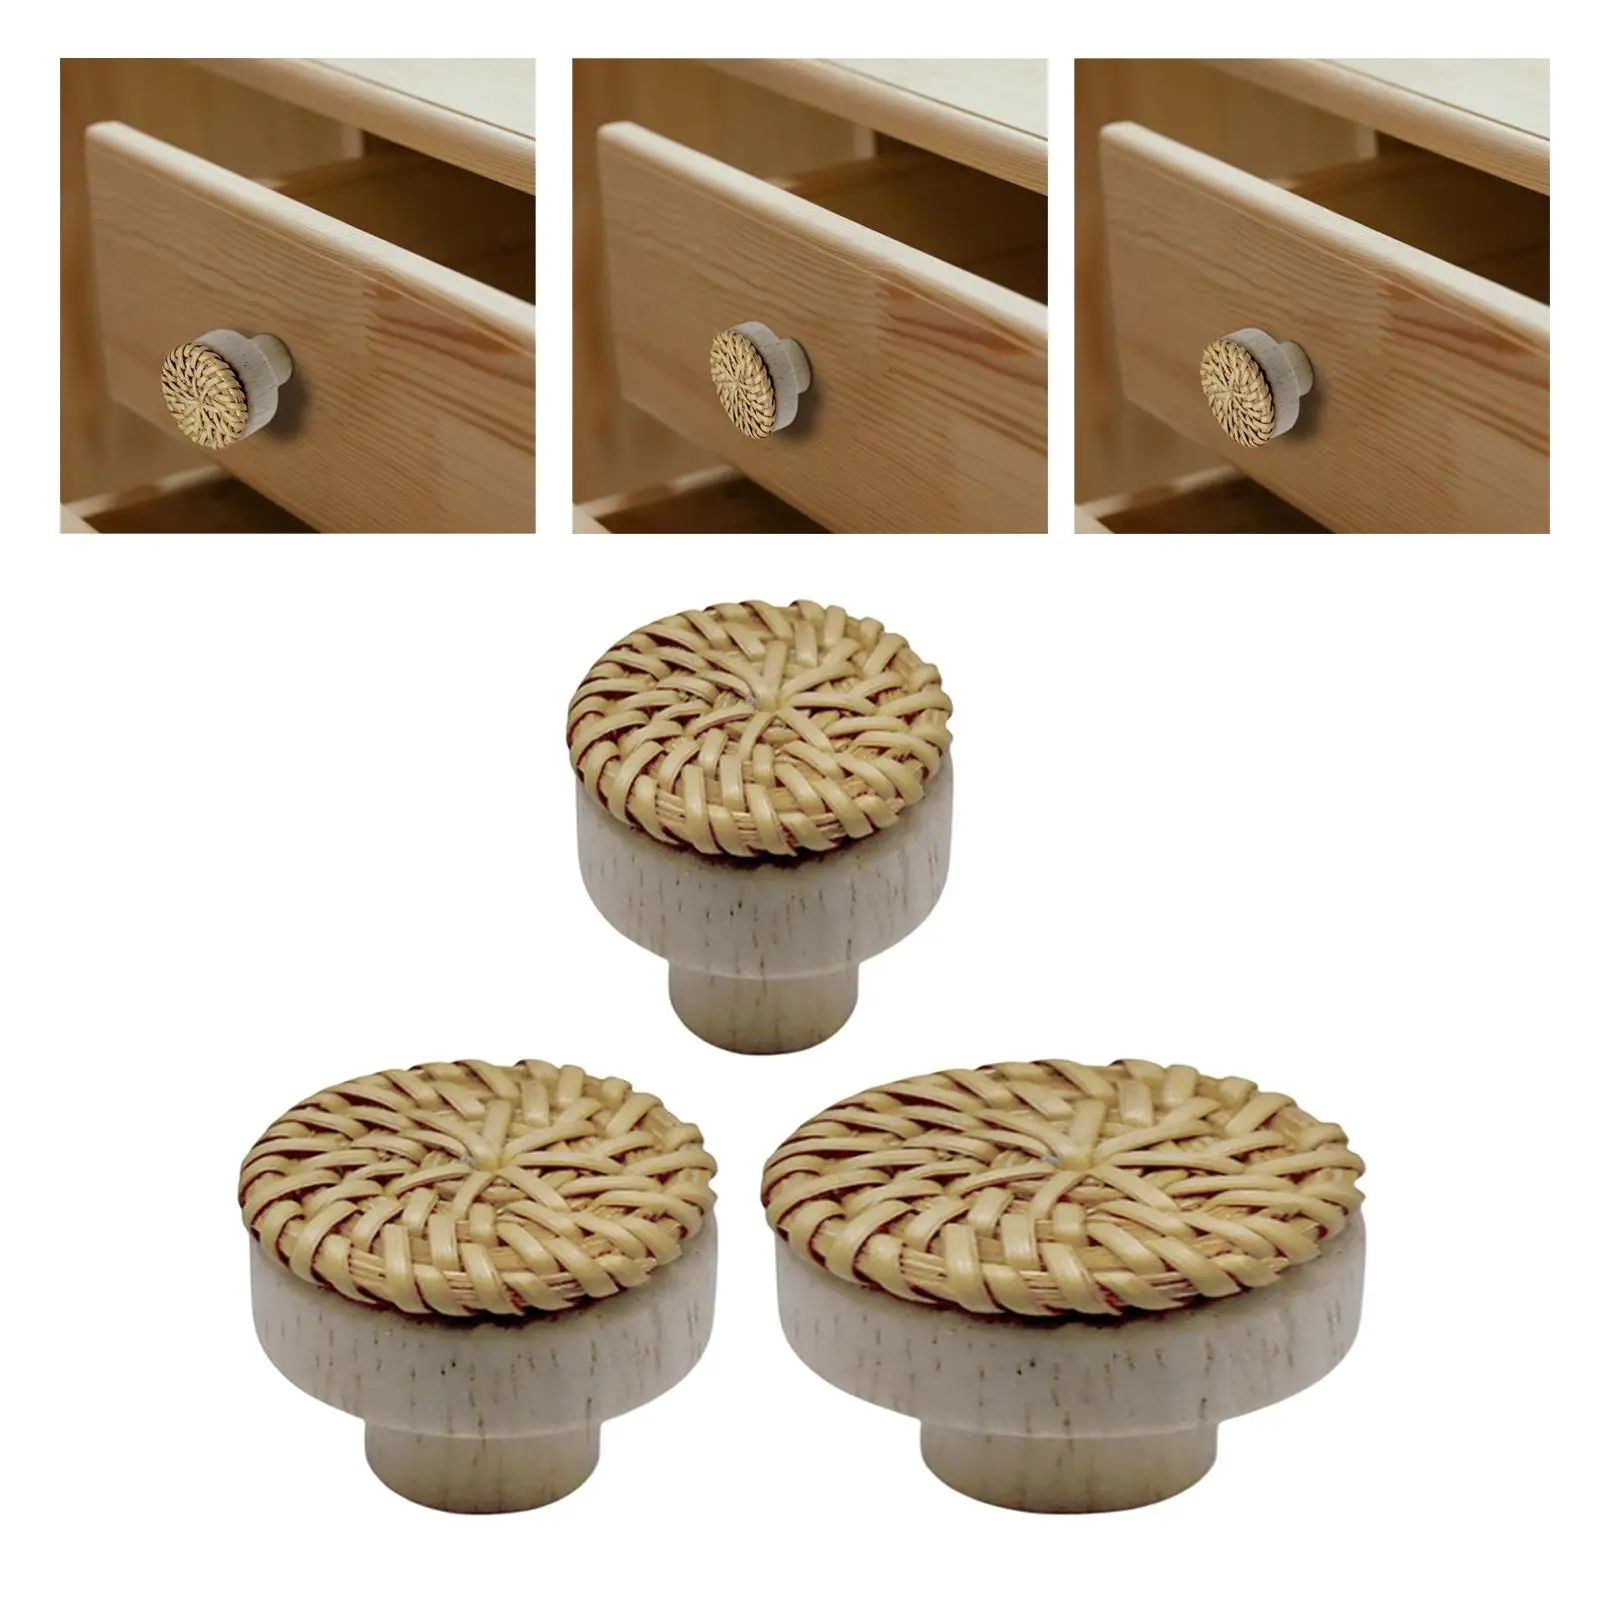 Rattan Dresser Knob Drawer Pulls Decorative Handmade Retro Style Rustic Accessories Handles for Cabinet Furniture